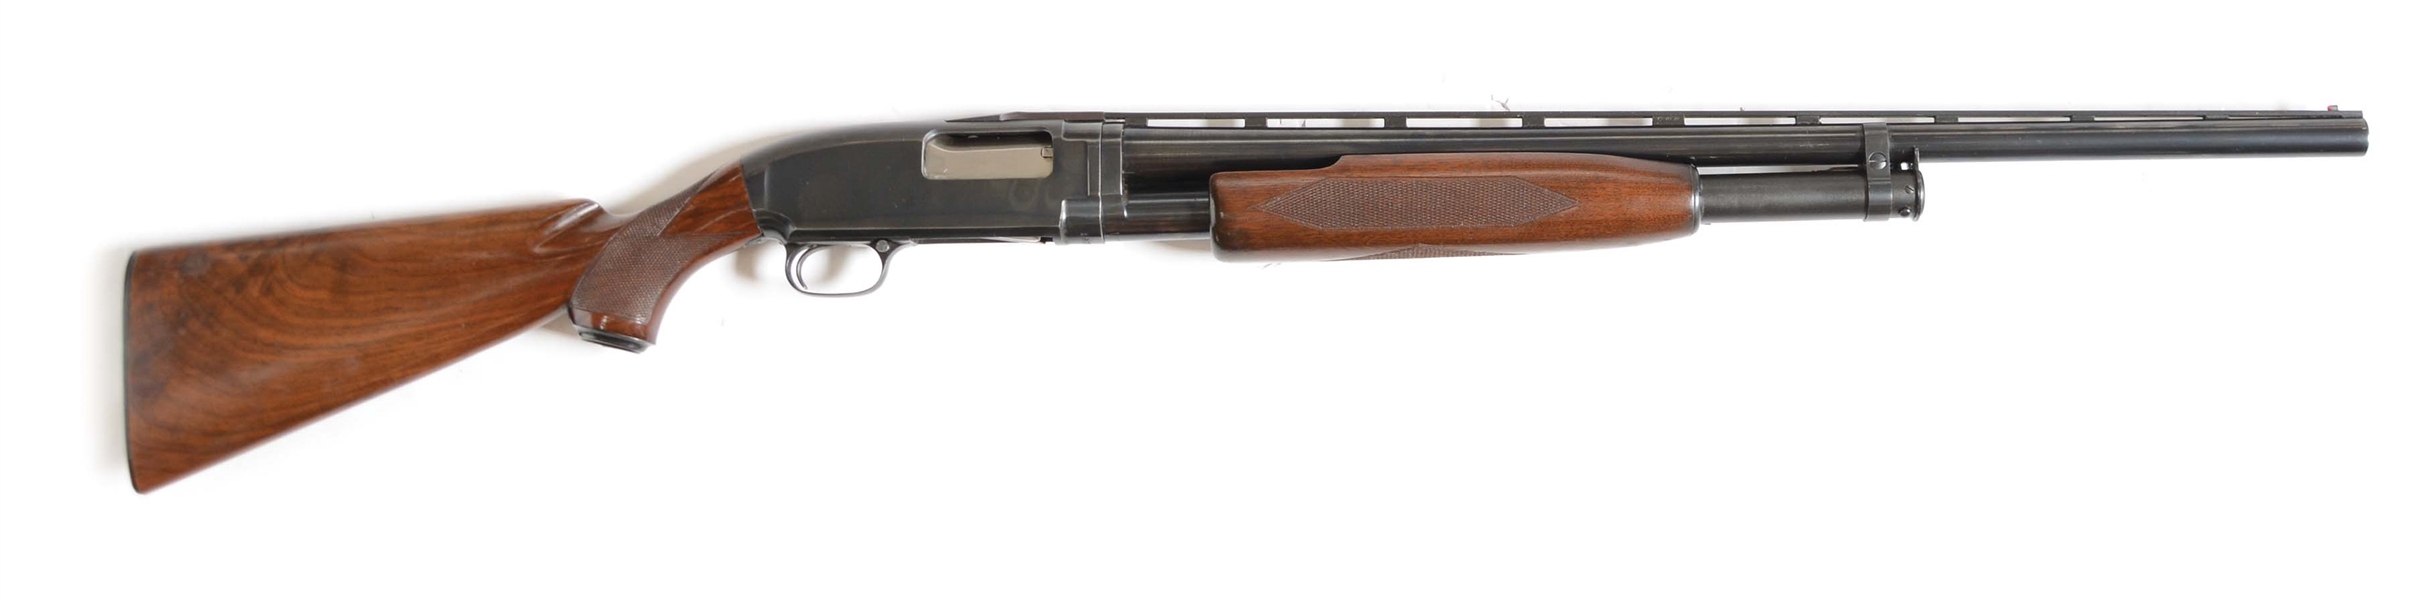 (C) WINCHESTER MODEL 12 12 BORE PUMP SHOTGUN (1962).